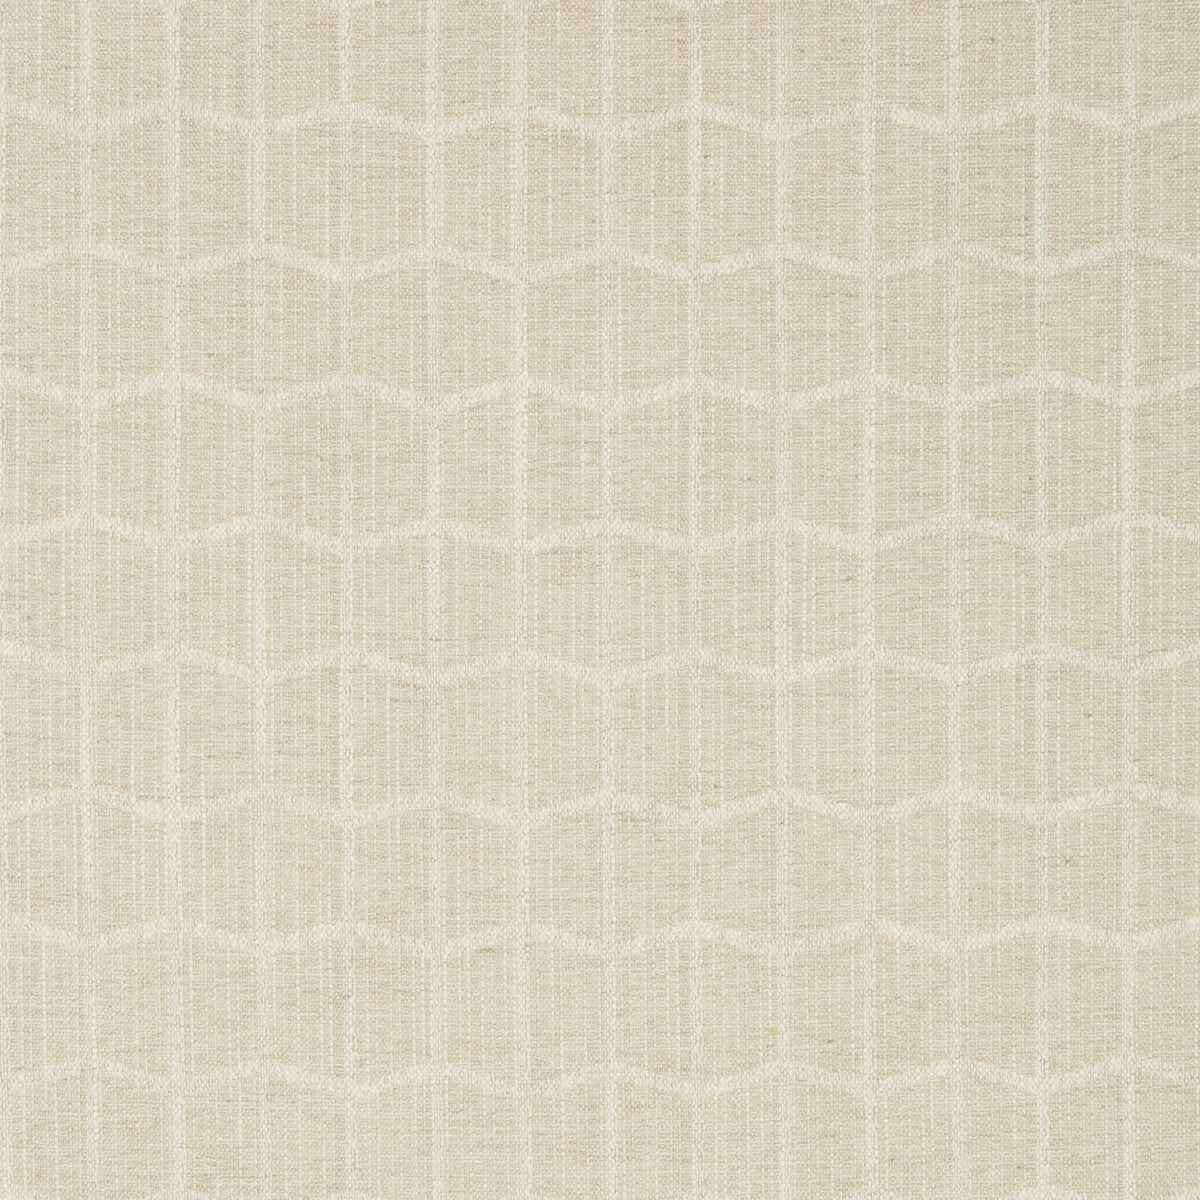 Kravet Smart fabric in 35332-111 color - pattern 35332.111.0 - by Kravet Smart in the Performance Kravetarmor collection